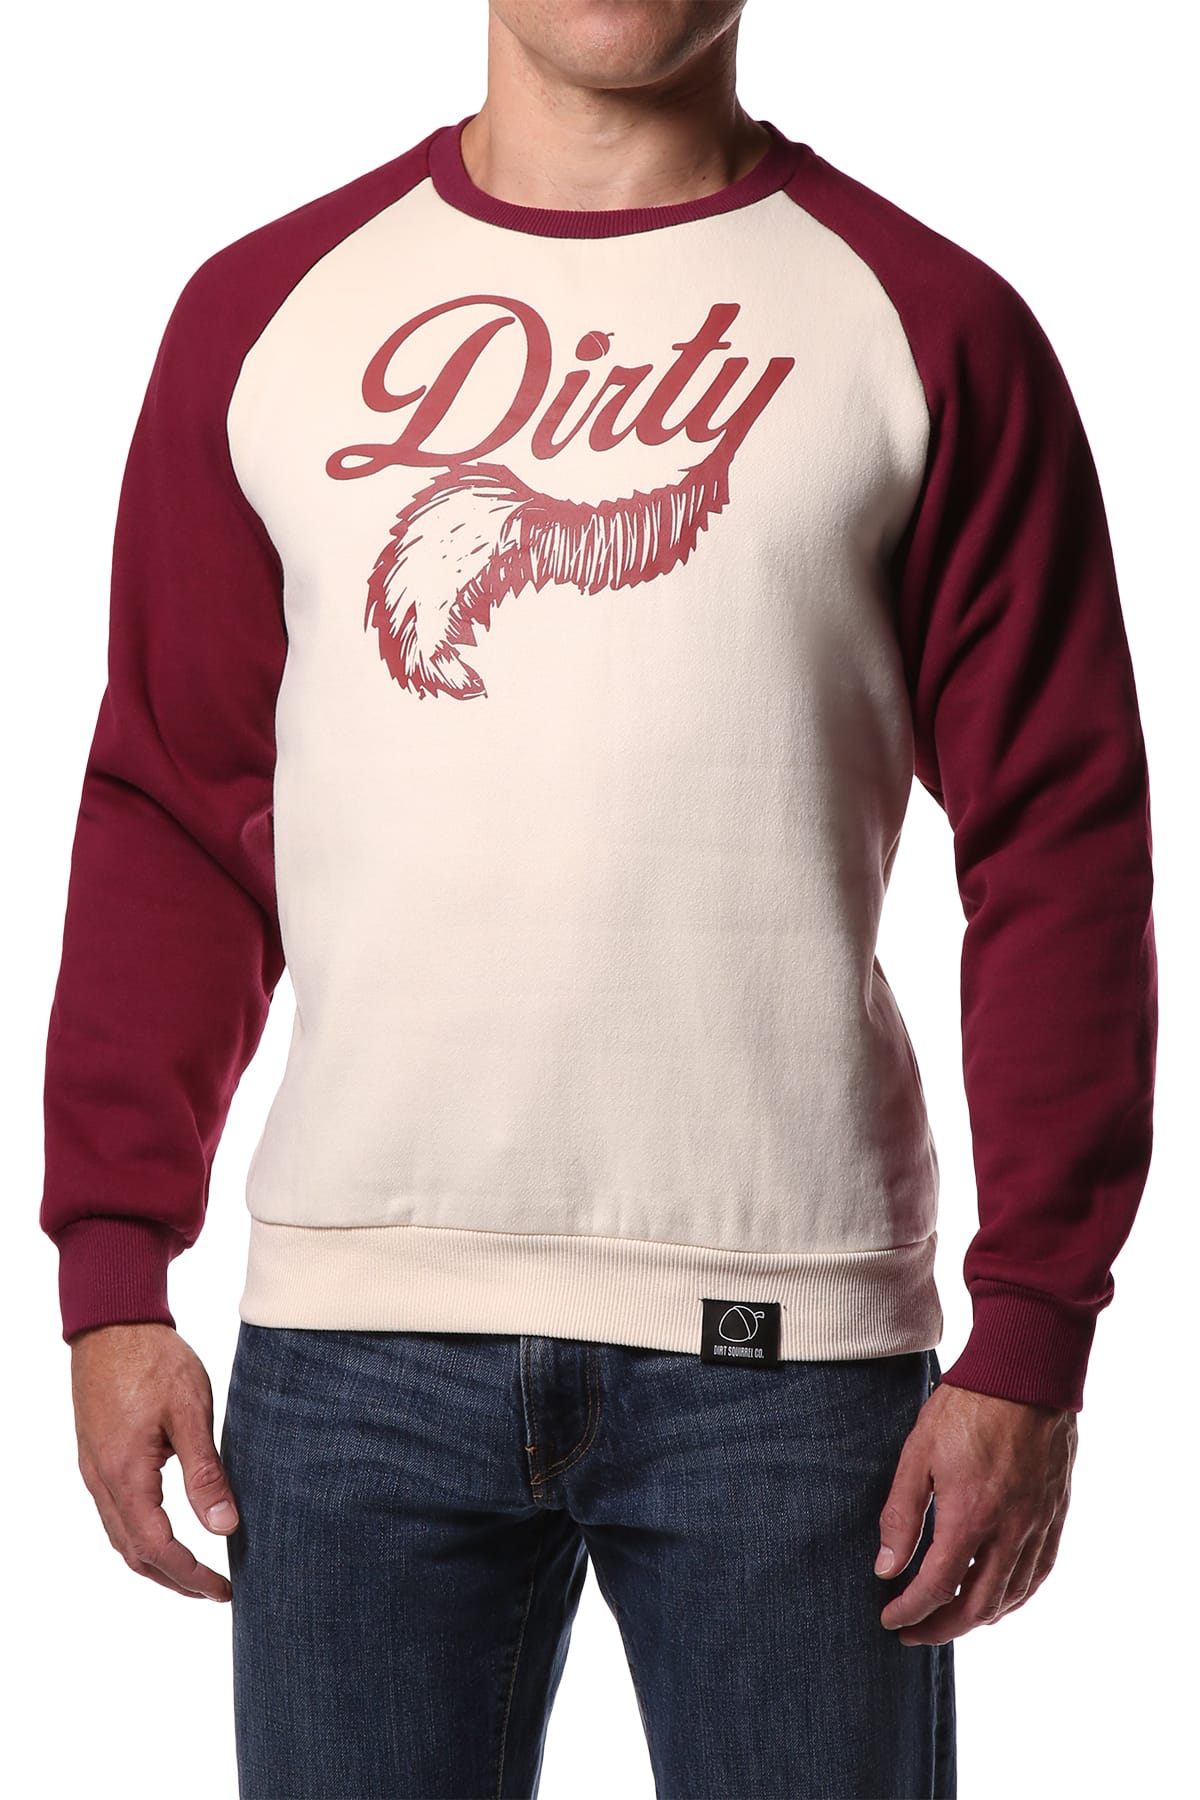 Dirt Squirrel Varsity Dirty Sweater